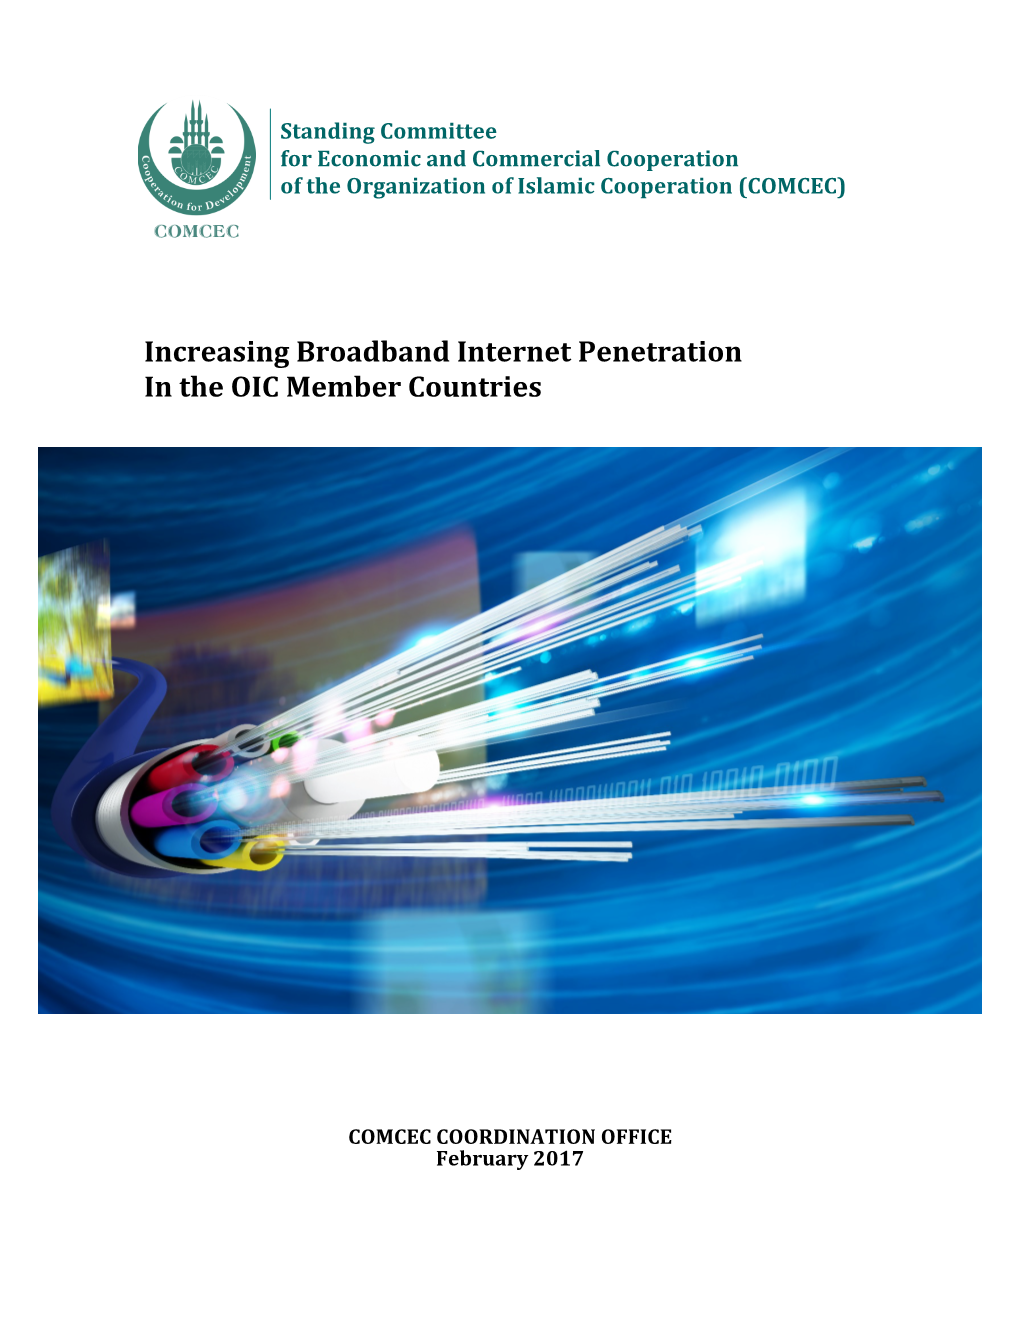 Increasing Broadband Internet Penetration in OIC Member